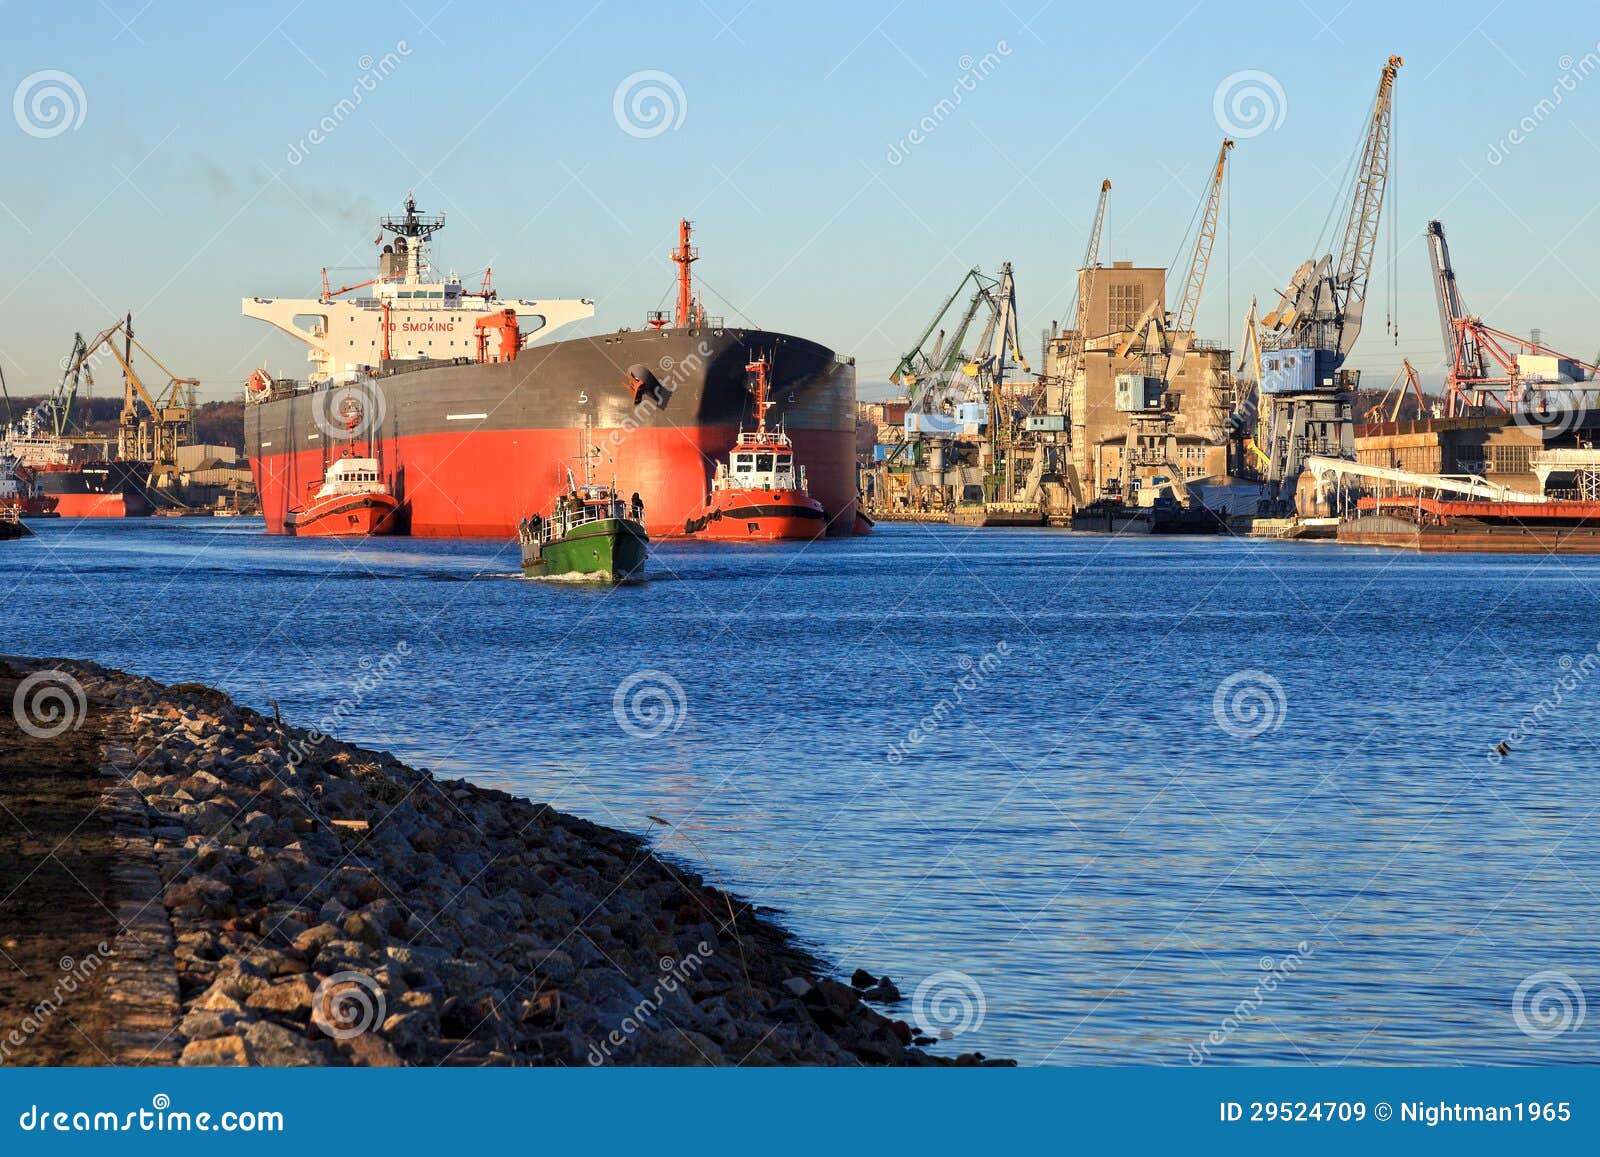 port of gdansk